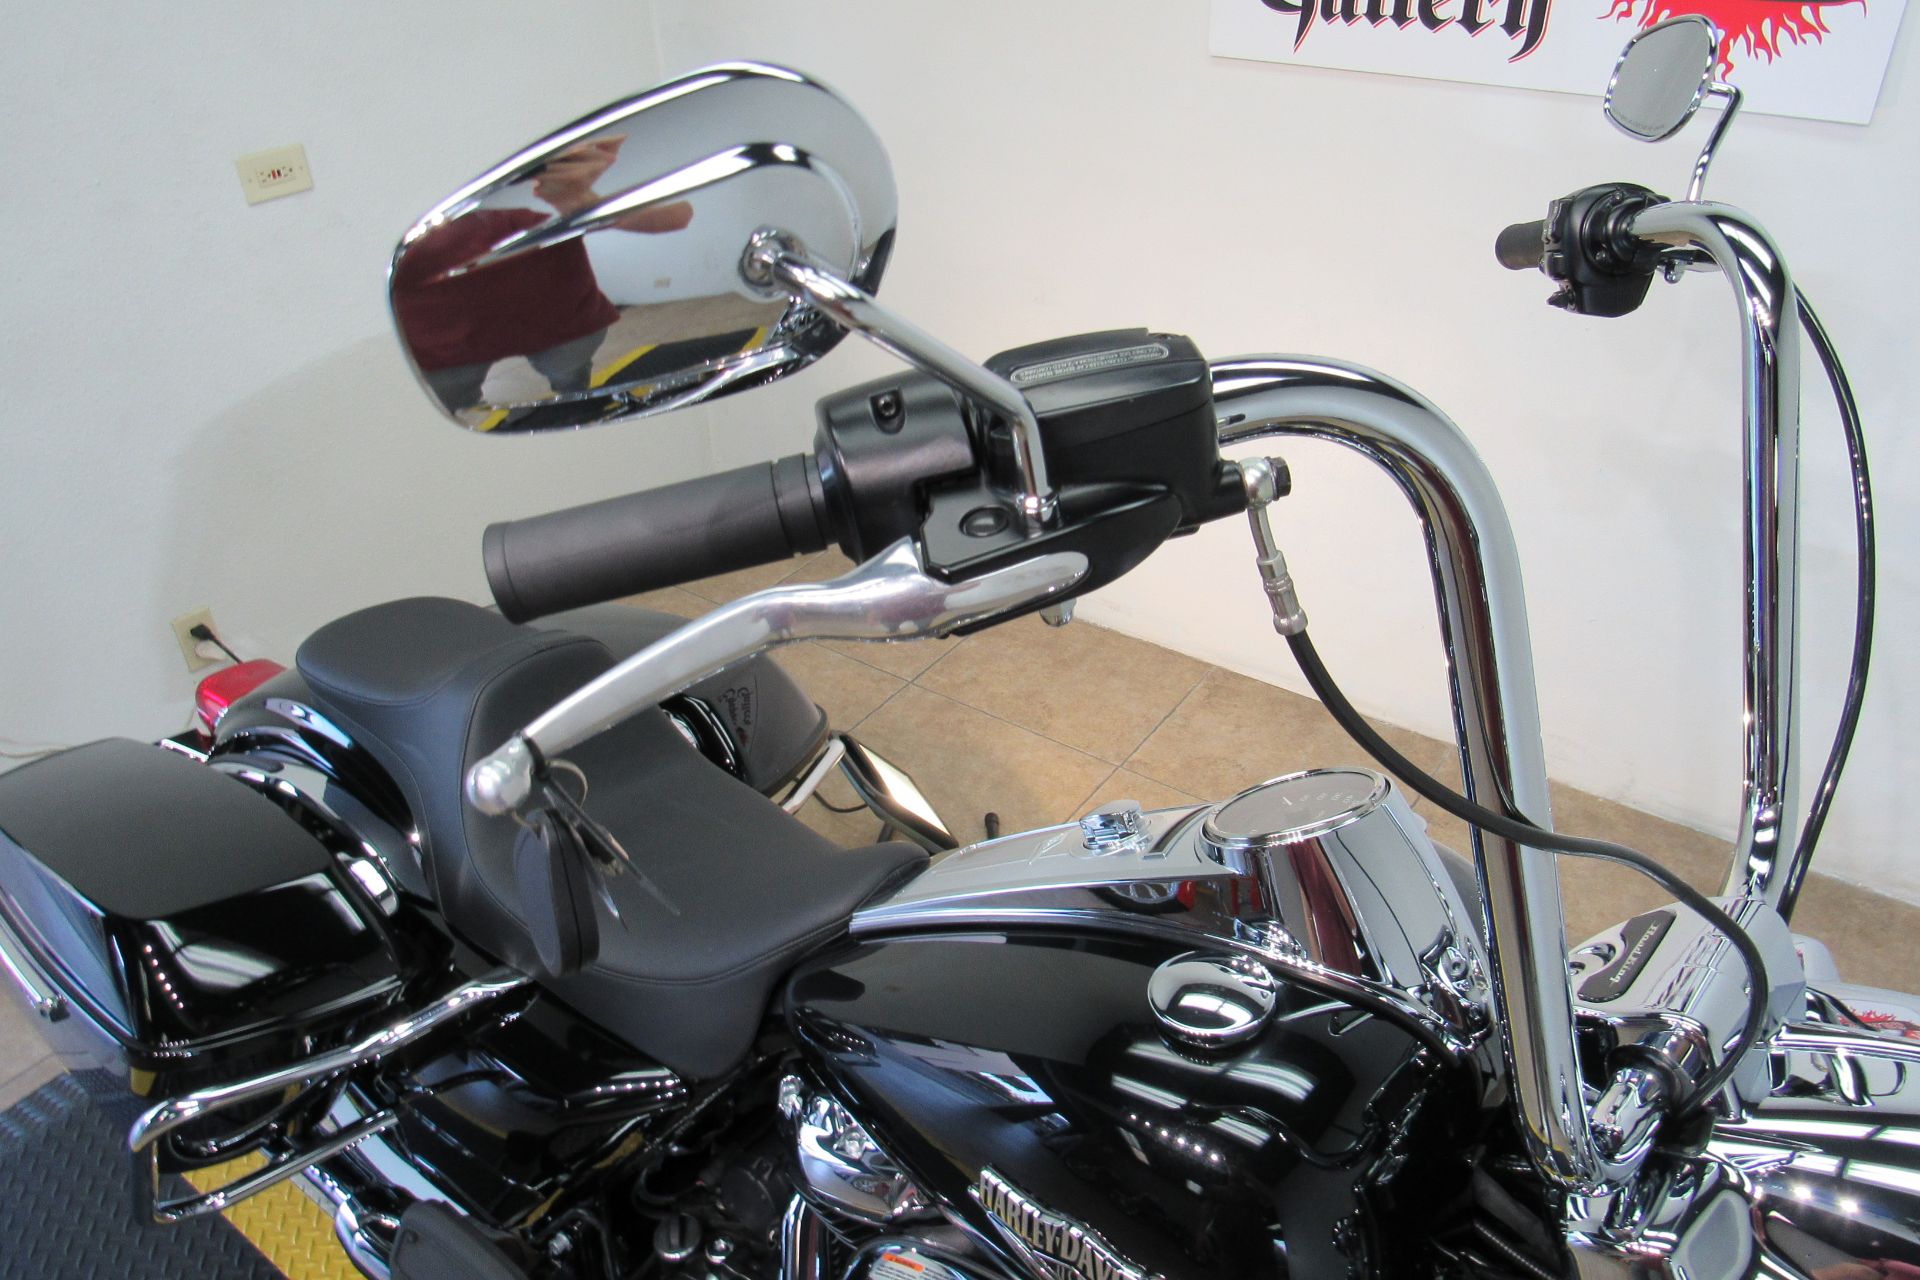 2021 Harley-Davidson Road King® in Temecula, California - Photo 26